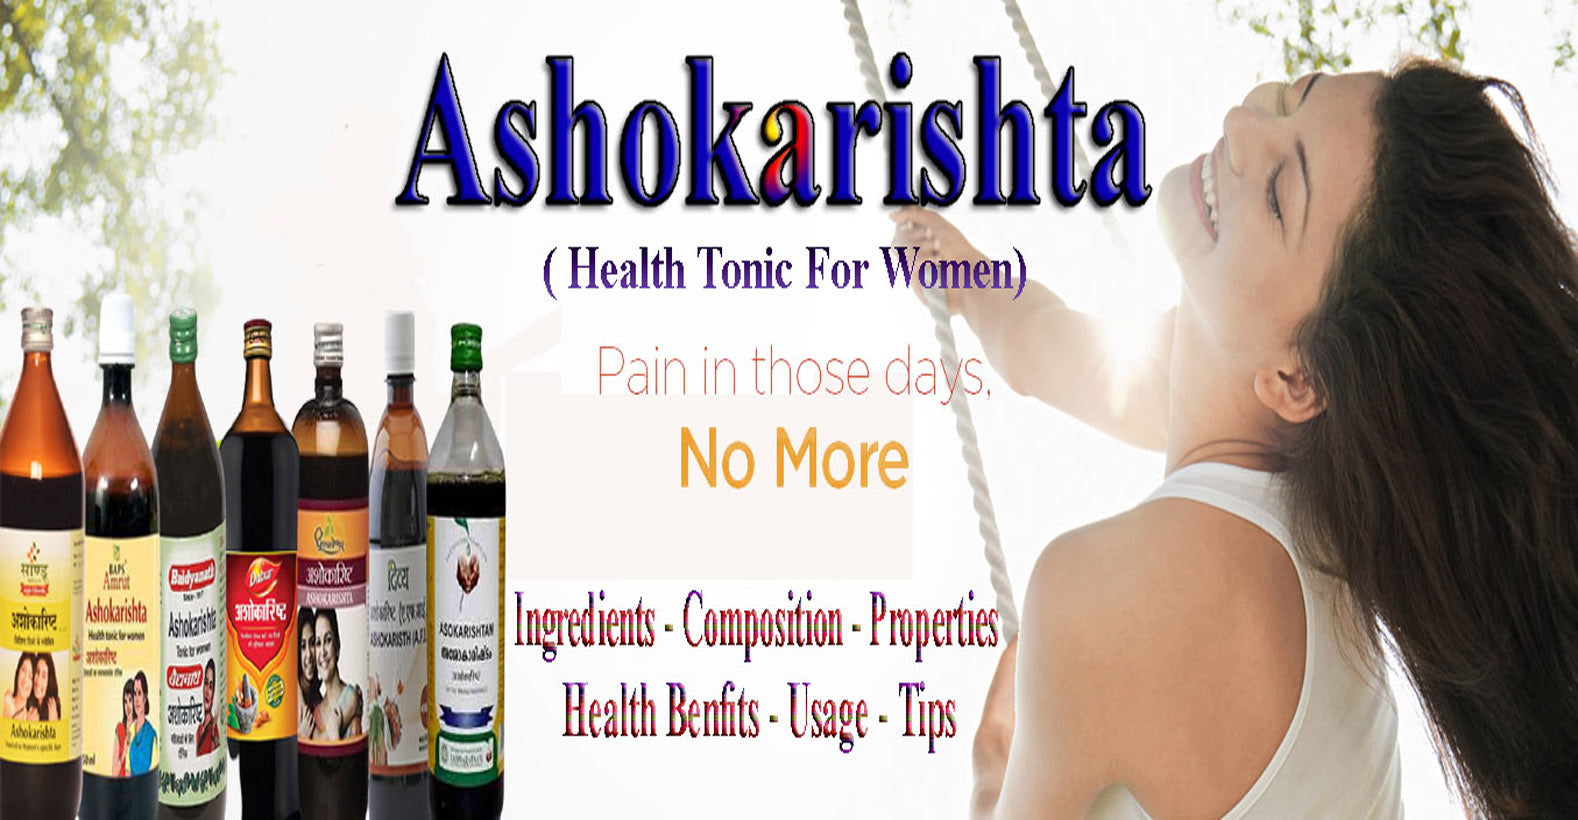 Ashokarishta - Ingredients, Composition, Properties, Health Benefits, Usage, Tips